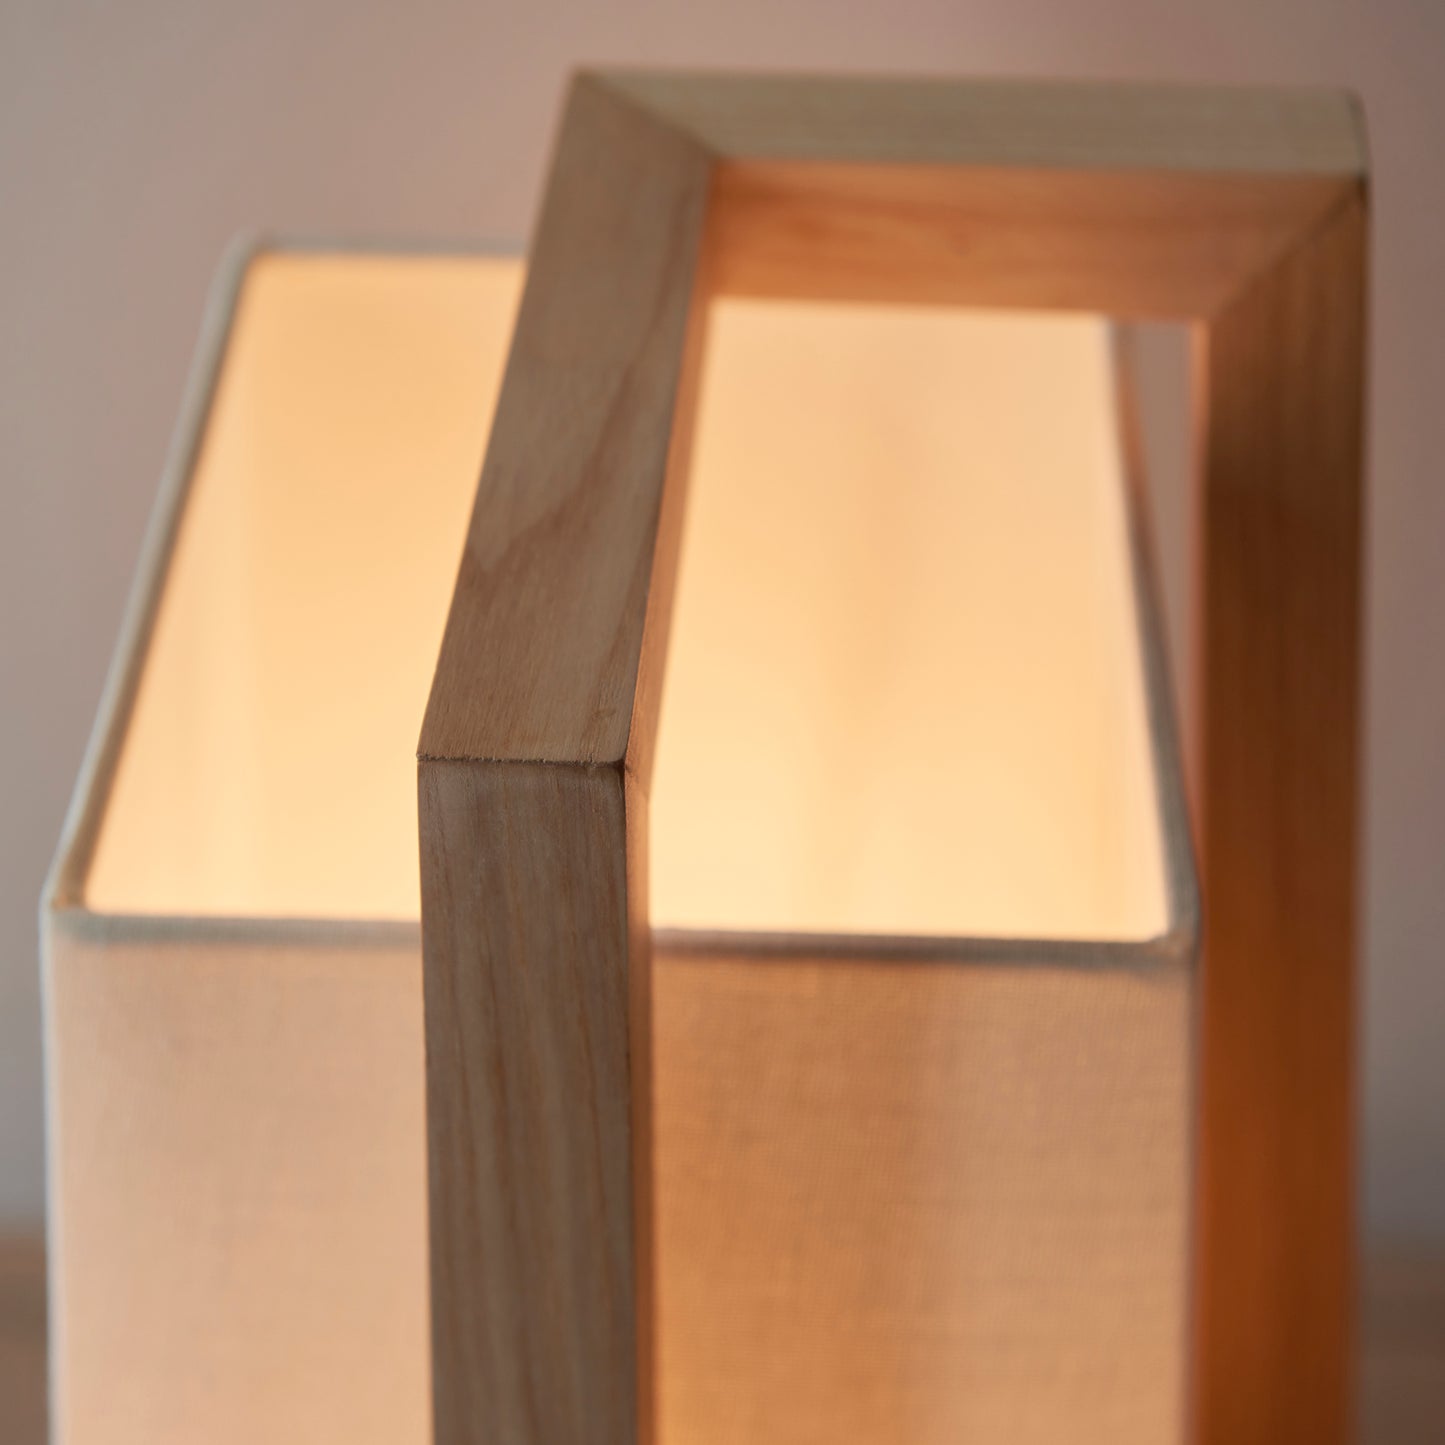 Tula Table Lamp